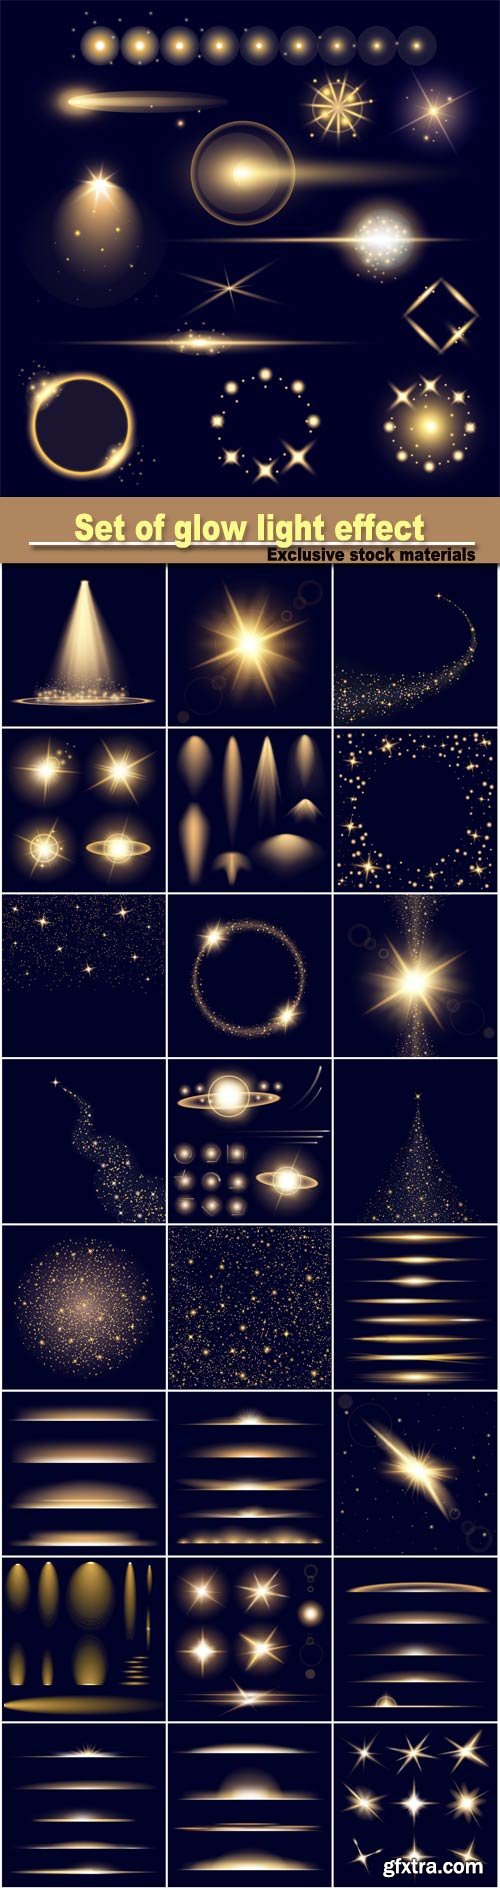 Vector set of glow light effect stars bursts with sparkles, for illustration template art design